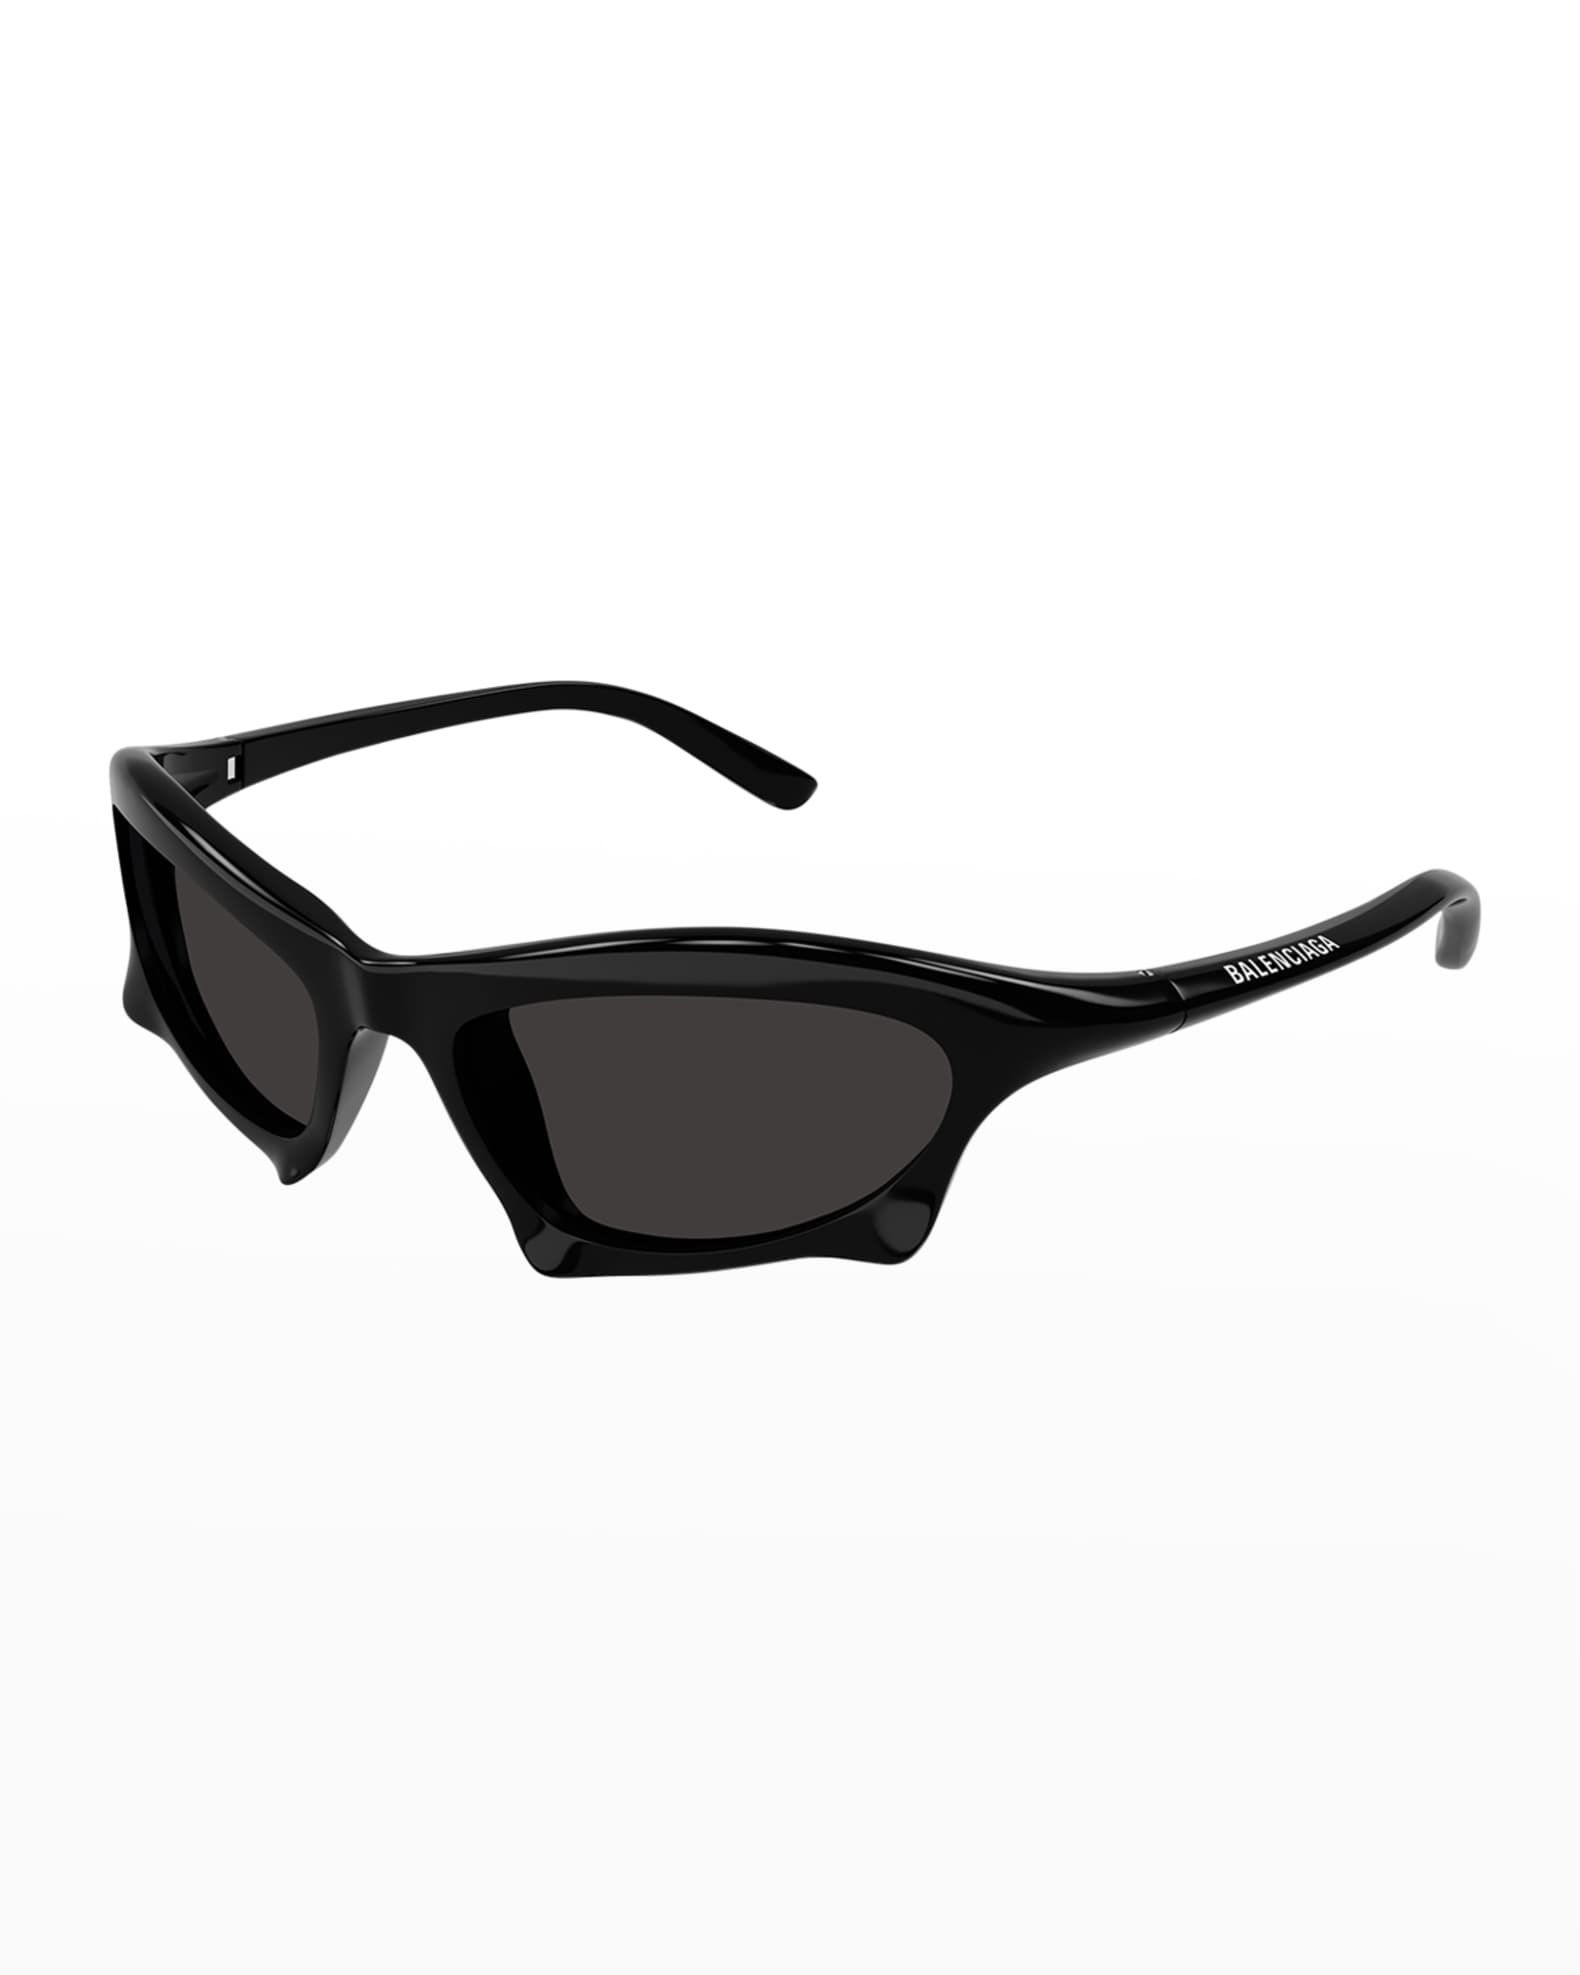 Balenciaga Round Flared Injection Plastic Sunglasses Neiman Marcus